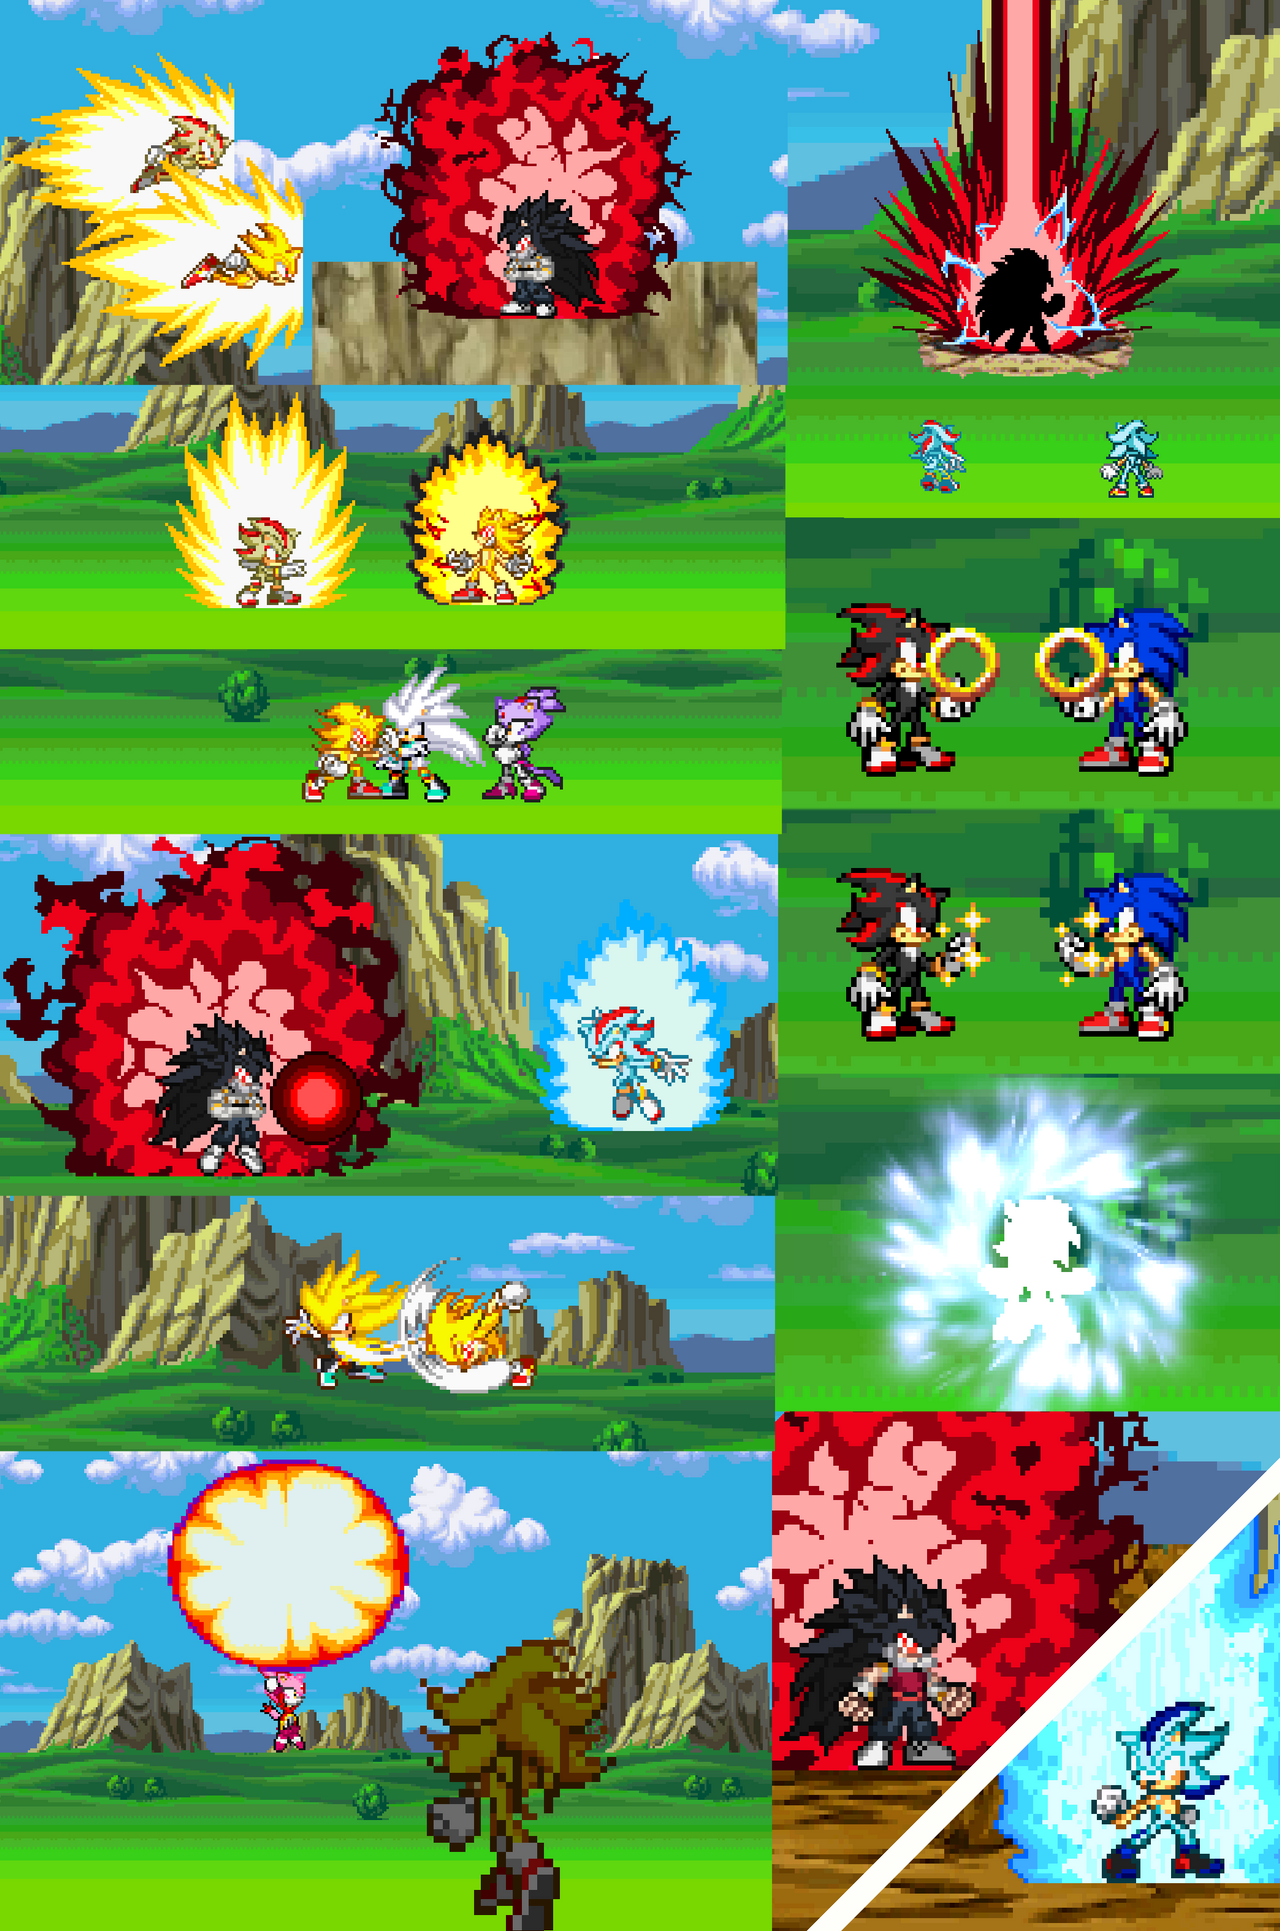 Sonic 3 A.I.R: Hyper Sonic Heroes 